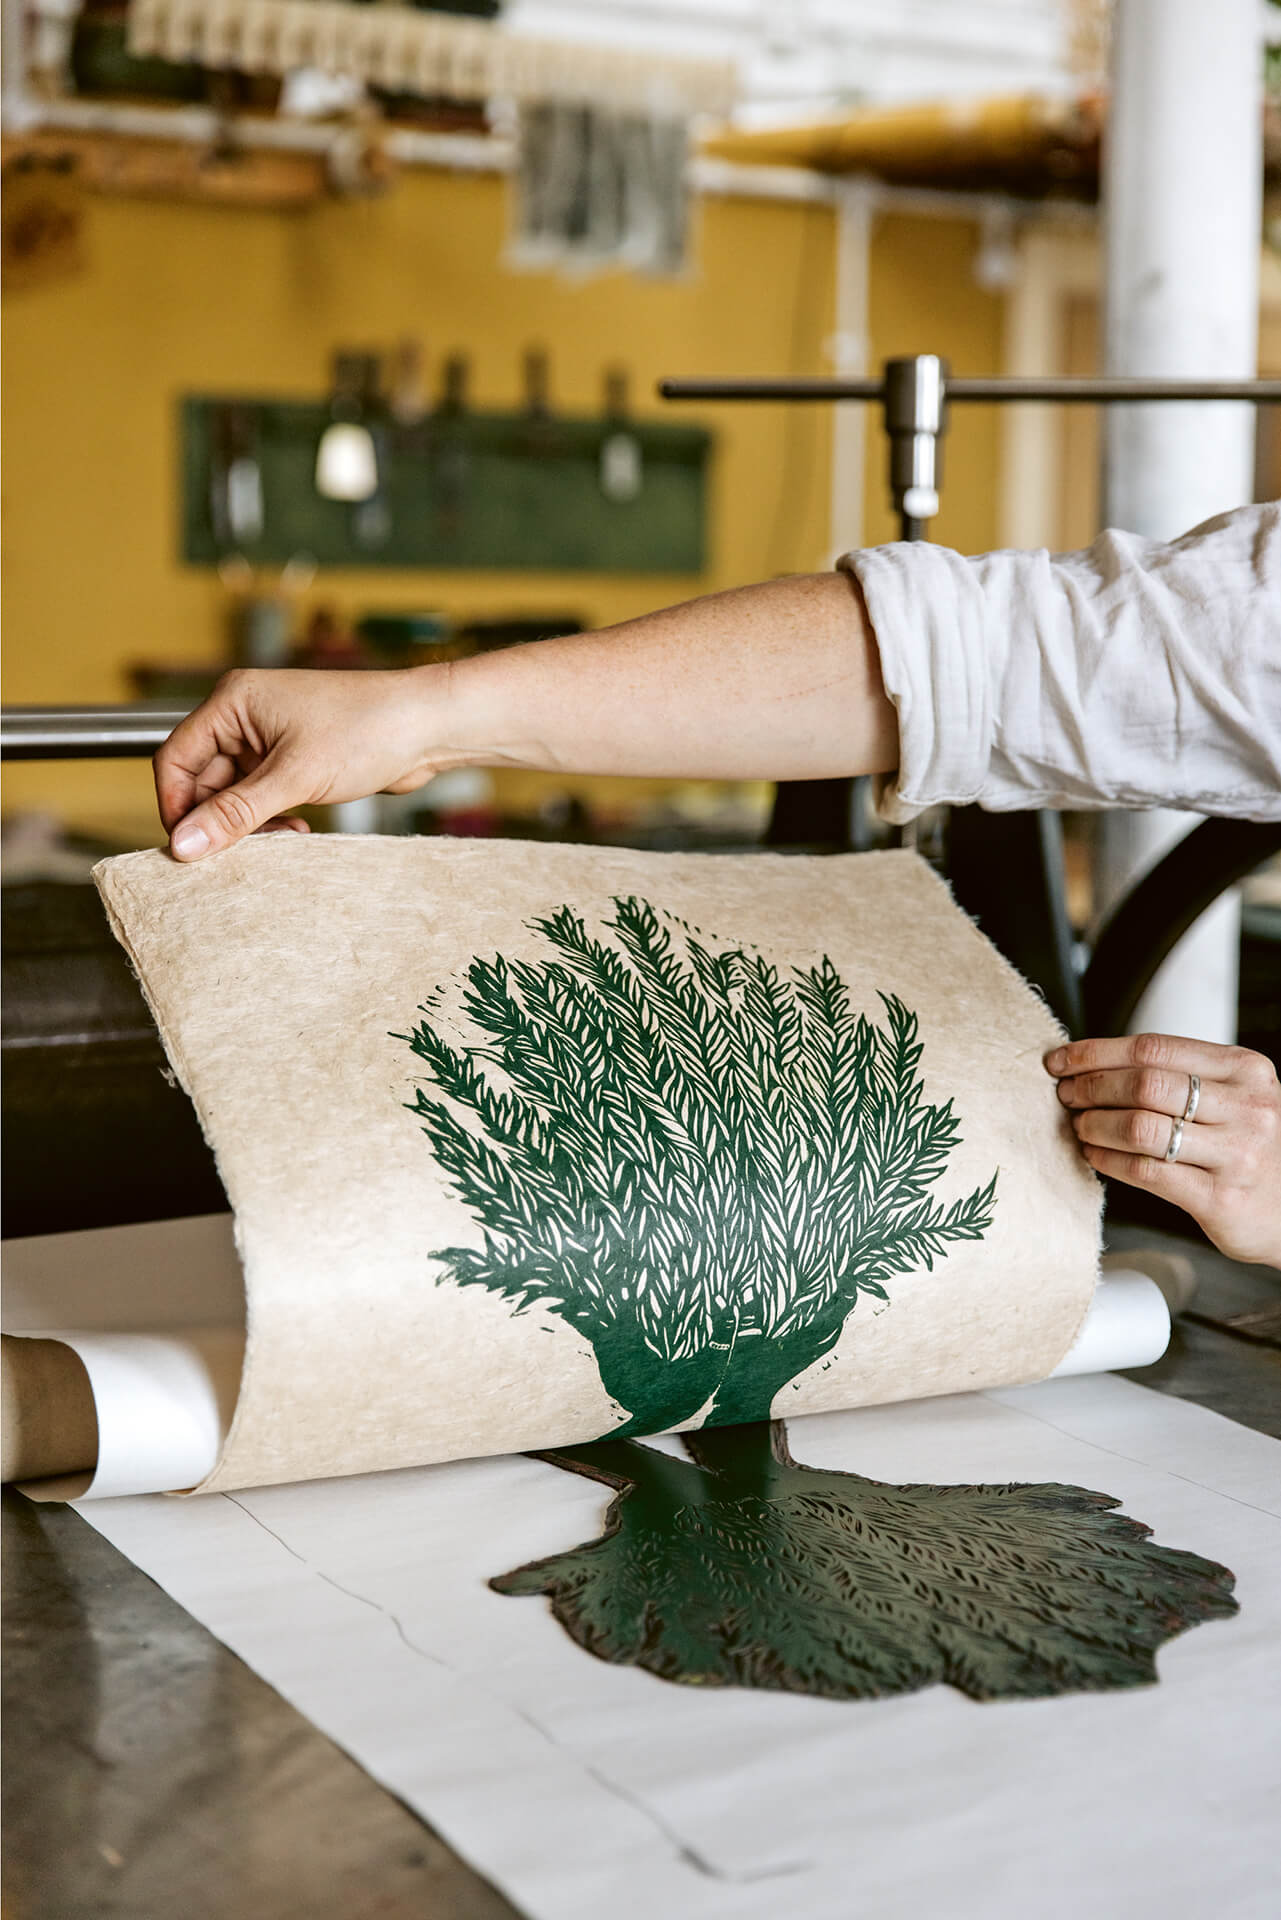 Printmaker Rosanna Morris in her studio. 91 Magazine reviews her book, Botanical Block Printing.